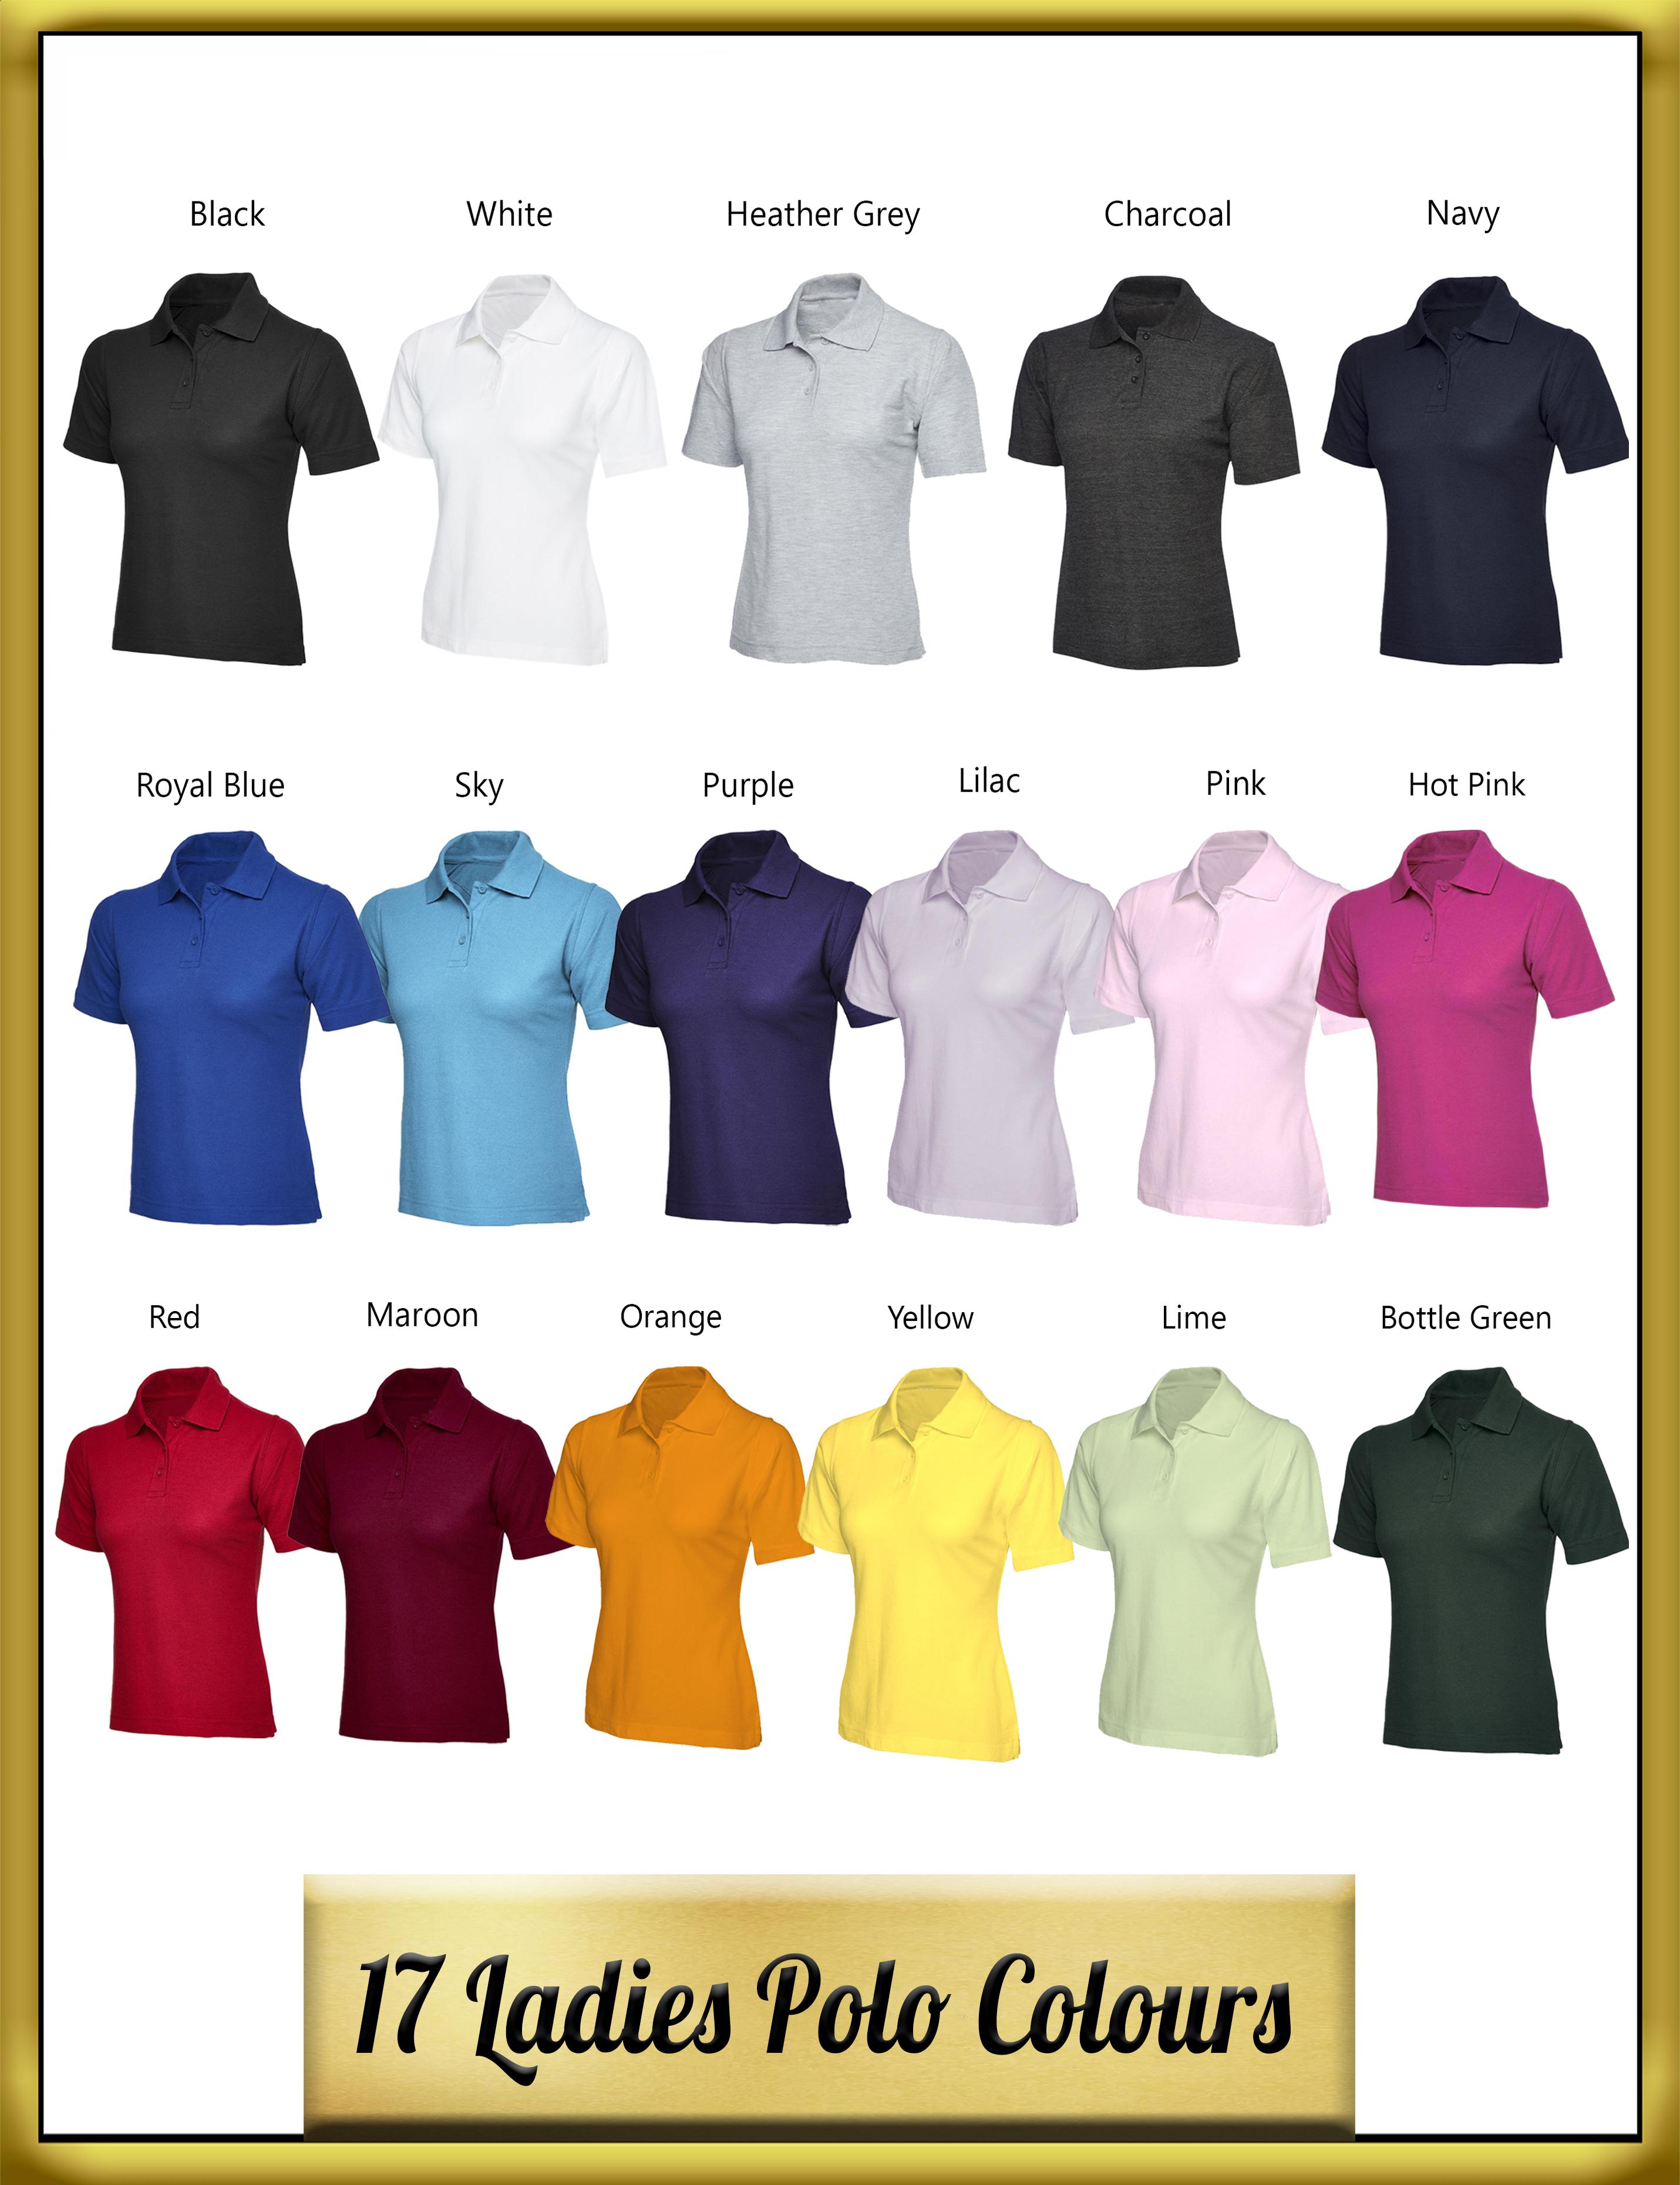 Photo Printed women's polo shirt colours